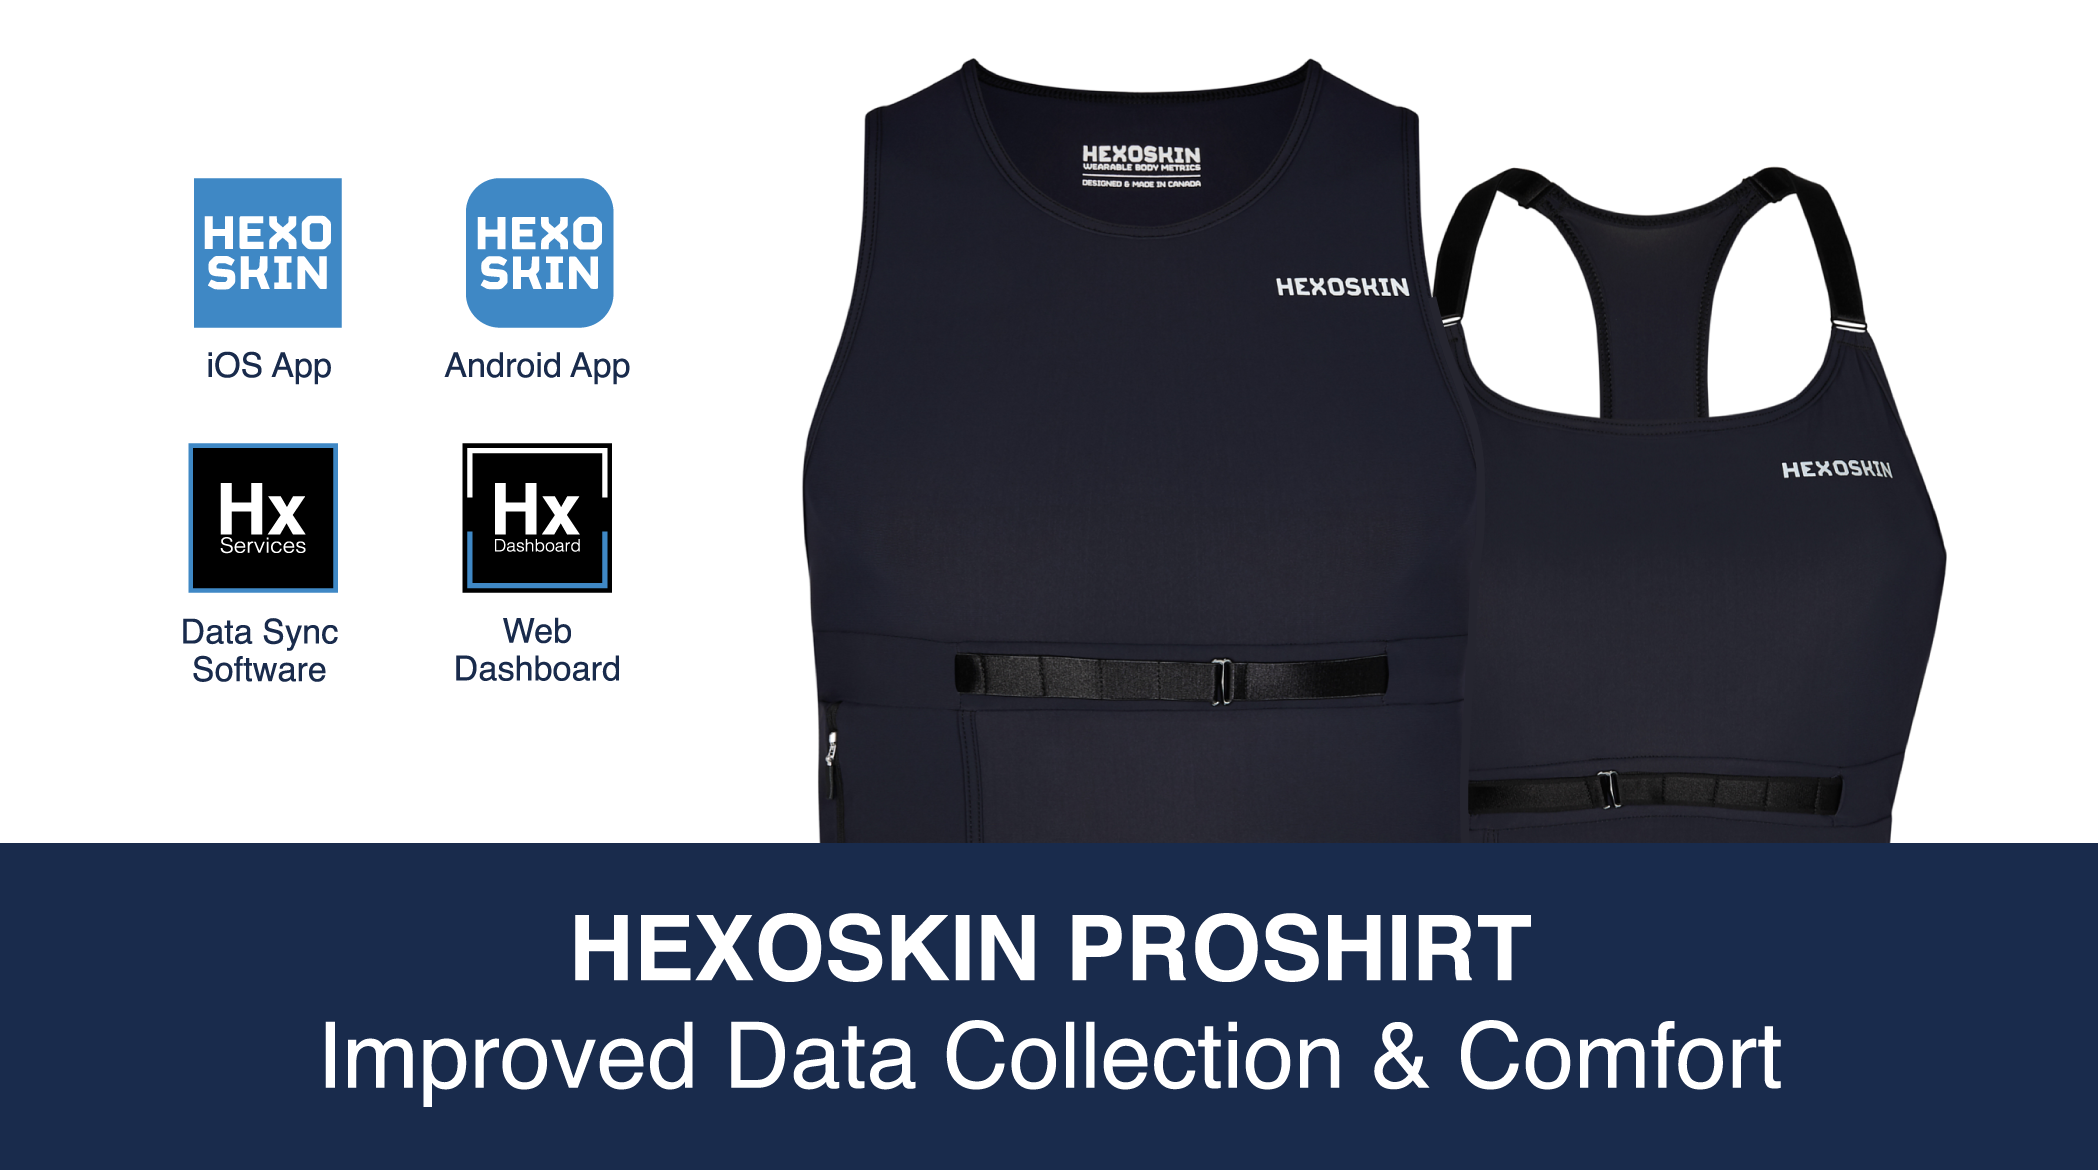 Introducing Hexoskin ProShirt